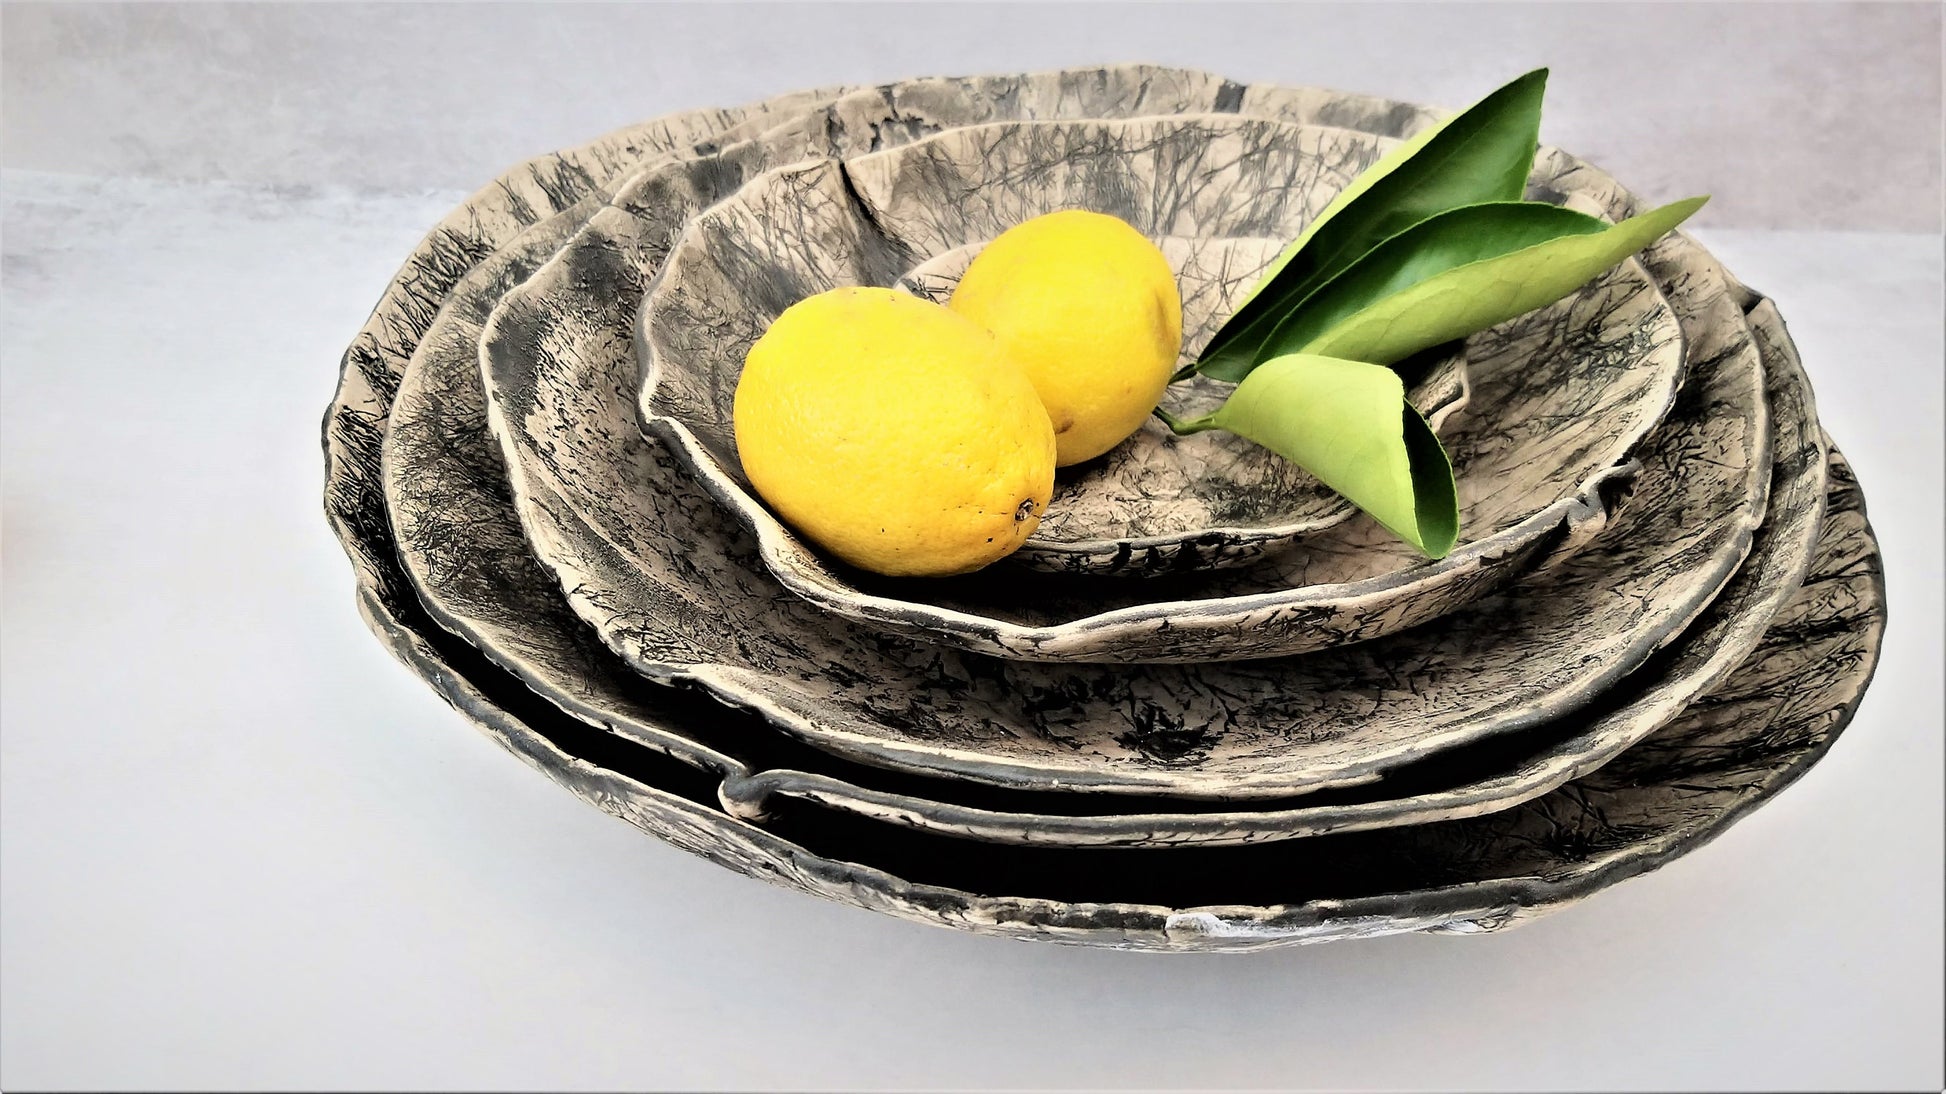 Unique Ceramic Fruit Bowl, Decorative Bowl, Contemporary Bowl